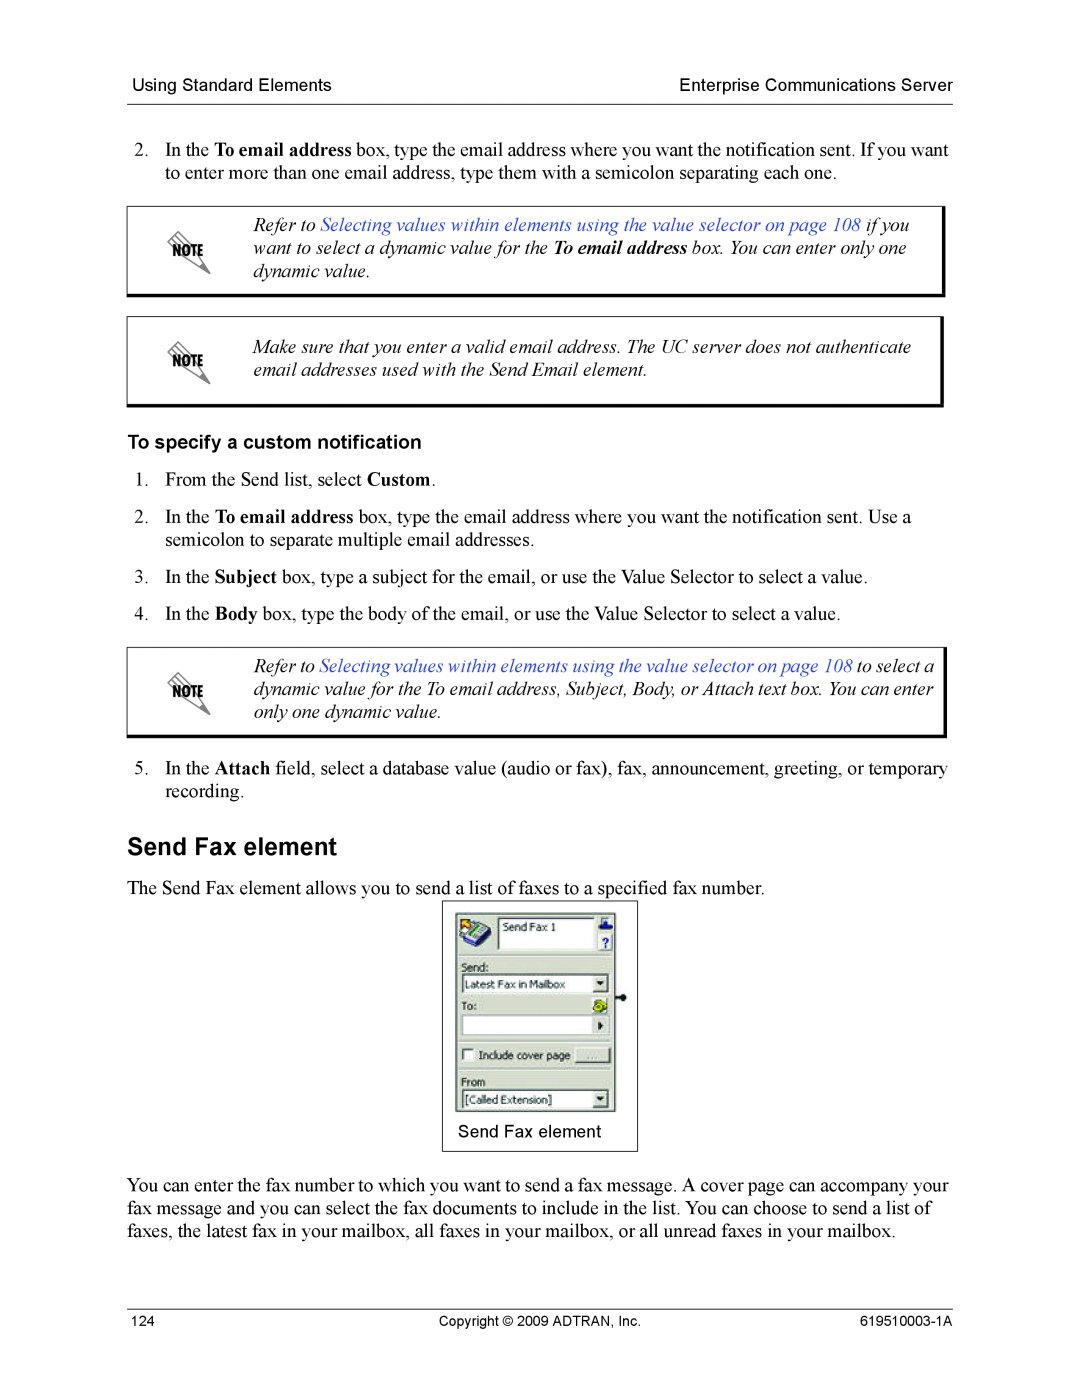 ADTRAN 619510003-1A manual Send Fax element, To specify a custom notification 